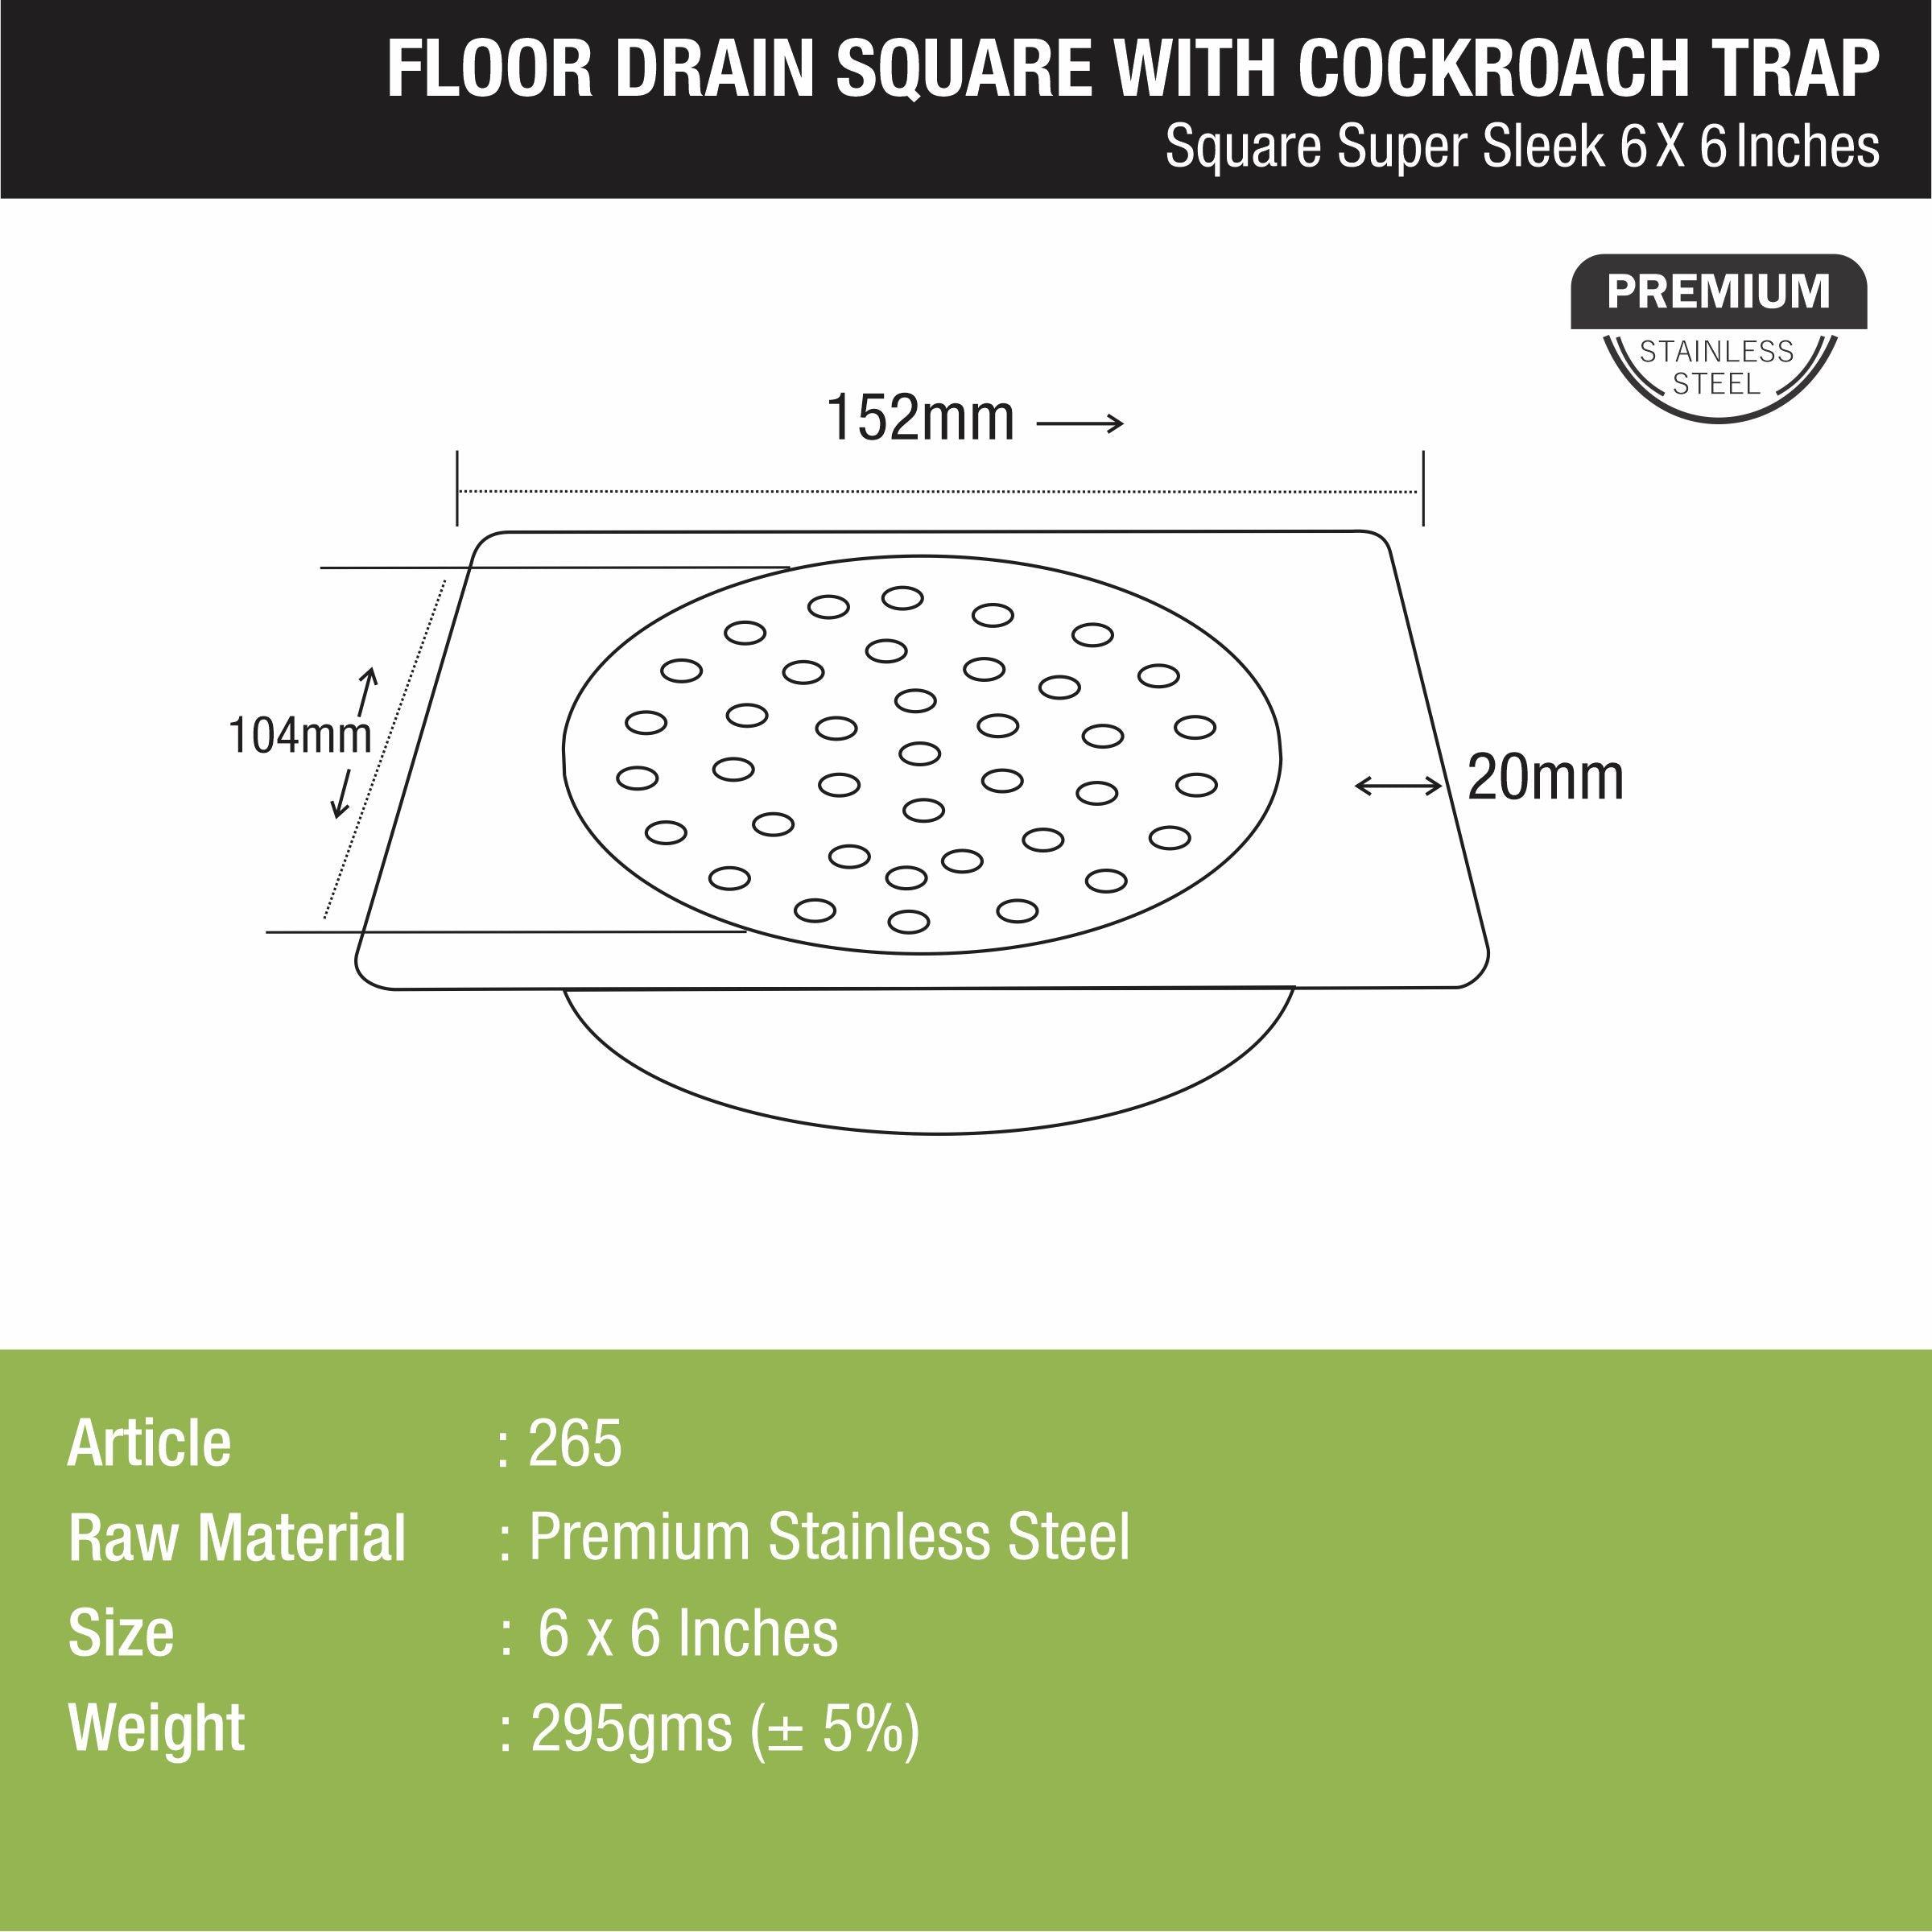 Super Sleek Square Floor Drain (6 x 6 Inches) with Cockroach Trap - LIPKA - Lipka Home